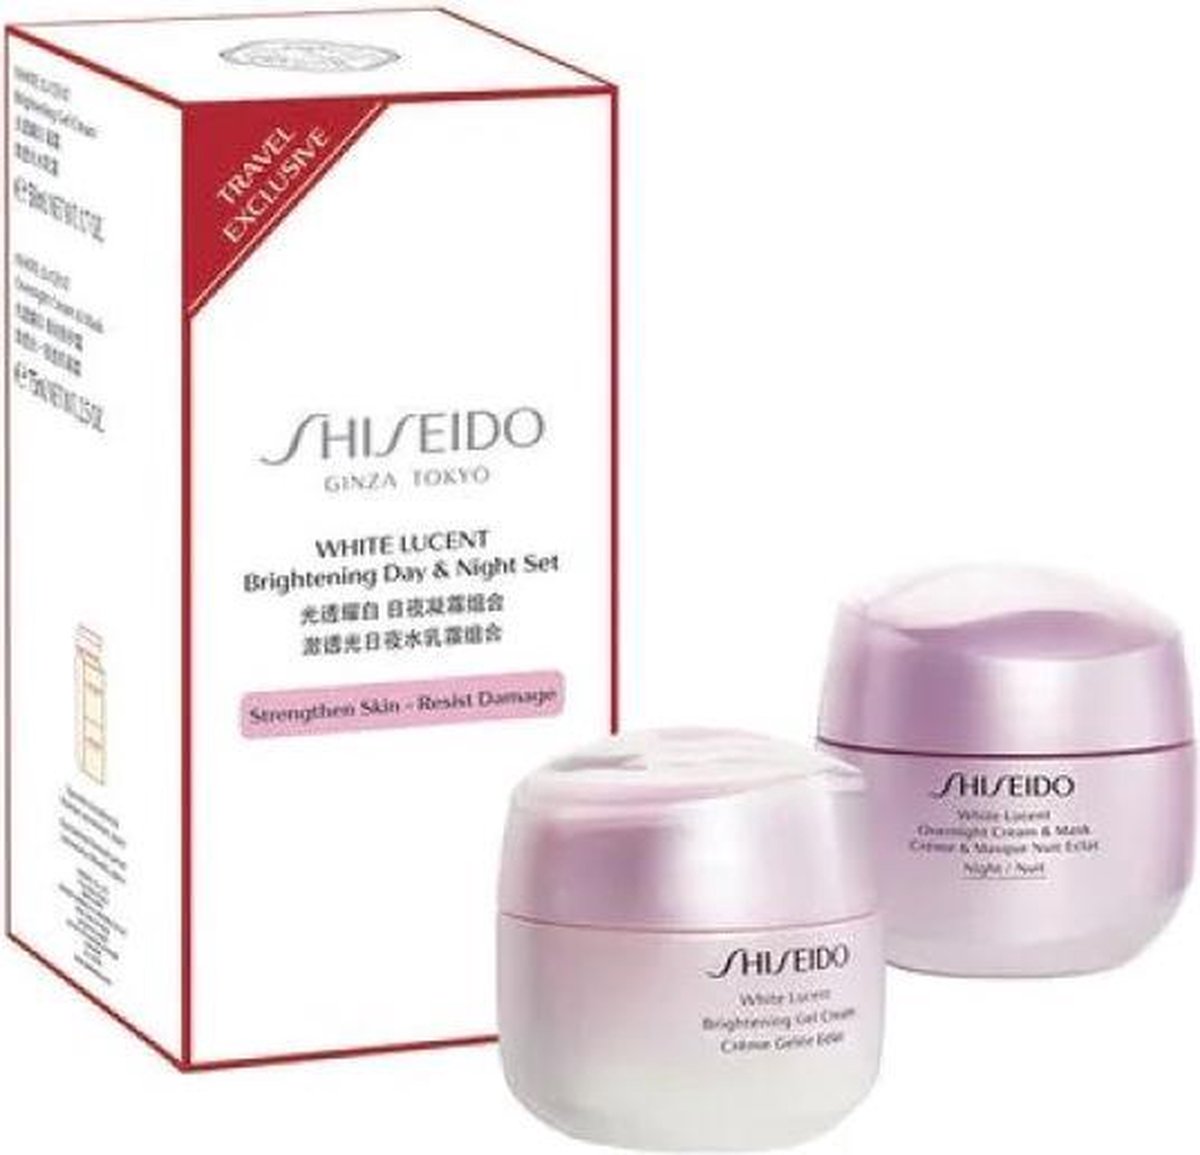 Shiseido White Lucent Day & Night Gel Set 50ml Day Gel + 75ml Night Gel